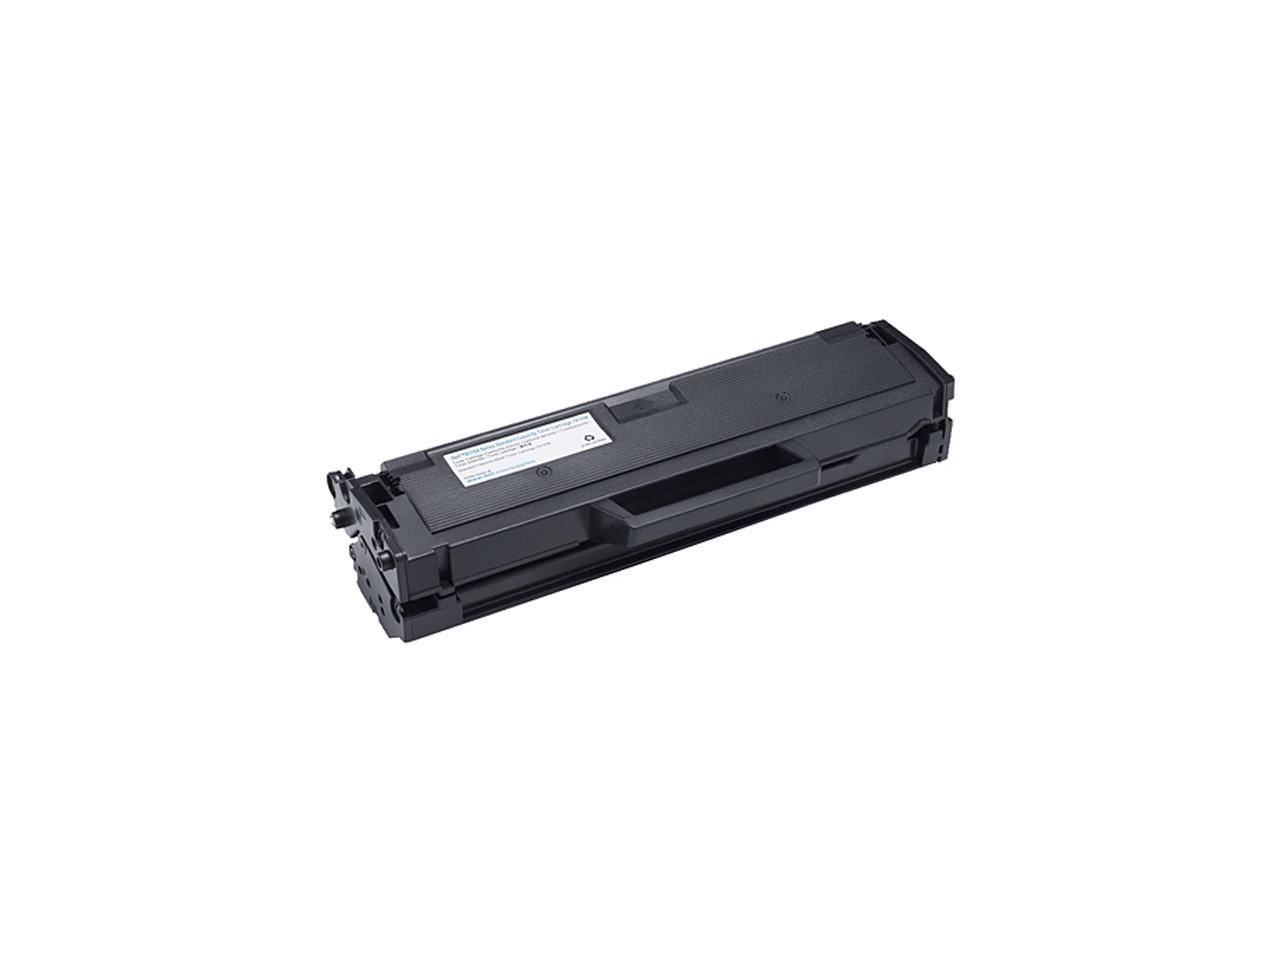 Dell YK1PM (Parts # HF44N) Toner Cartridge 1,500 page yield for Dell B1160/B1160w/B1163w/B1165nfw printers; Black (331-7335)